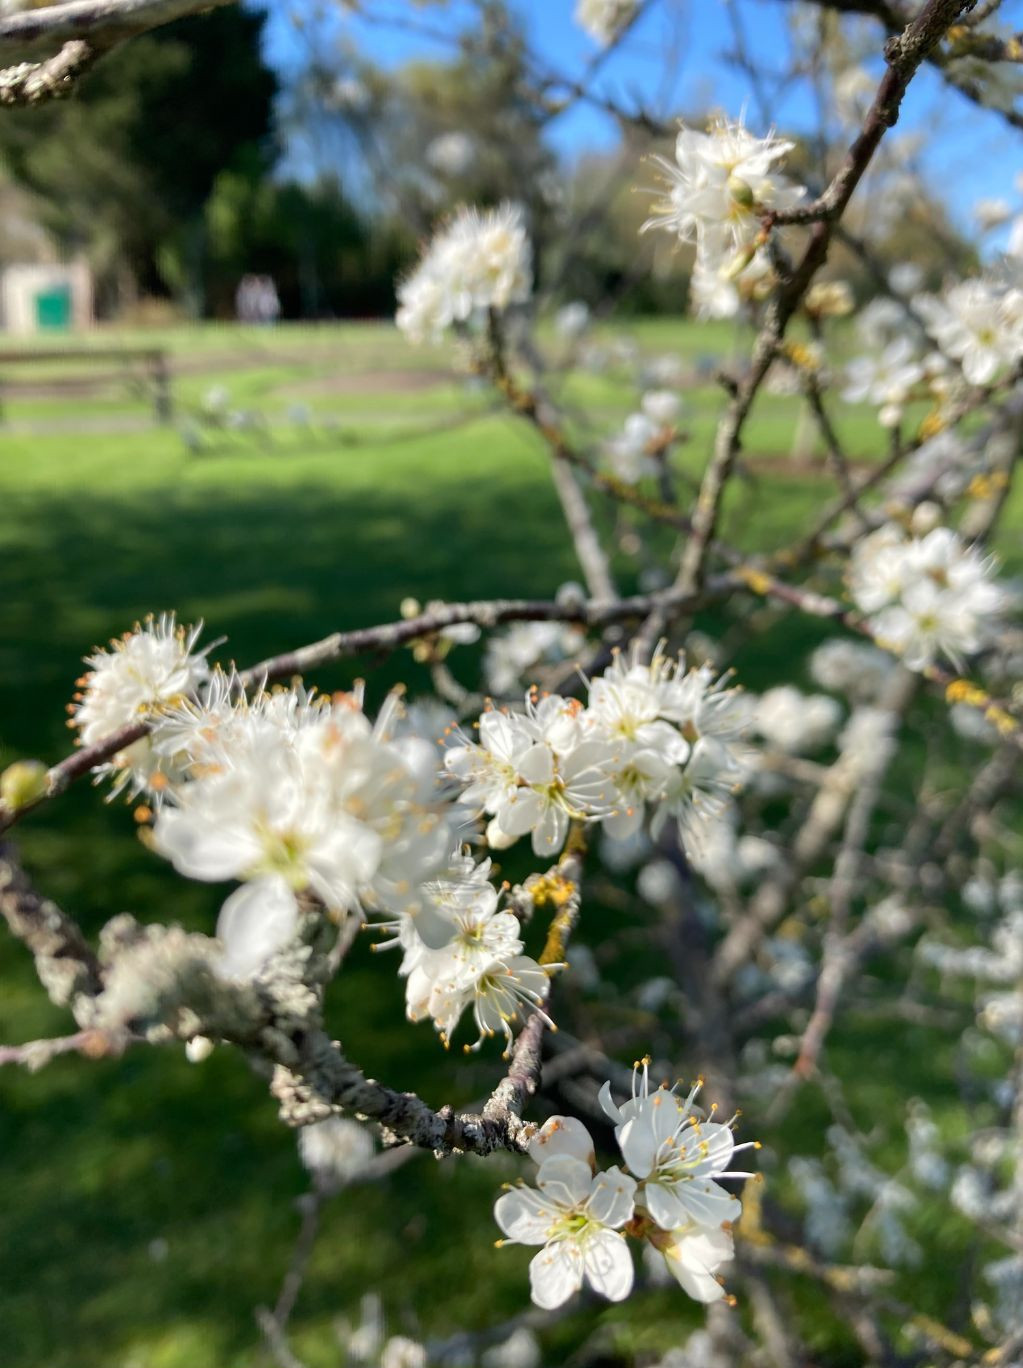 Prunus spinosa flowering the in the National Botanic Gardens 2022